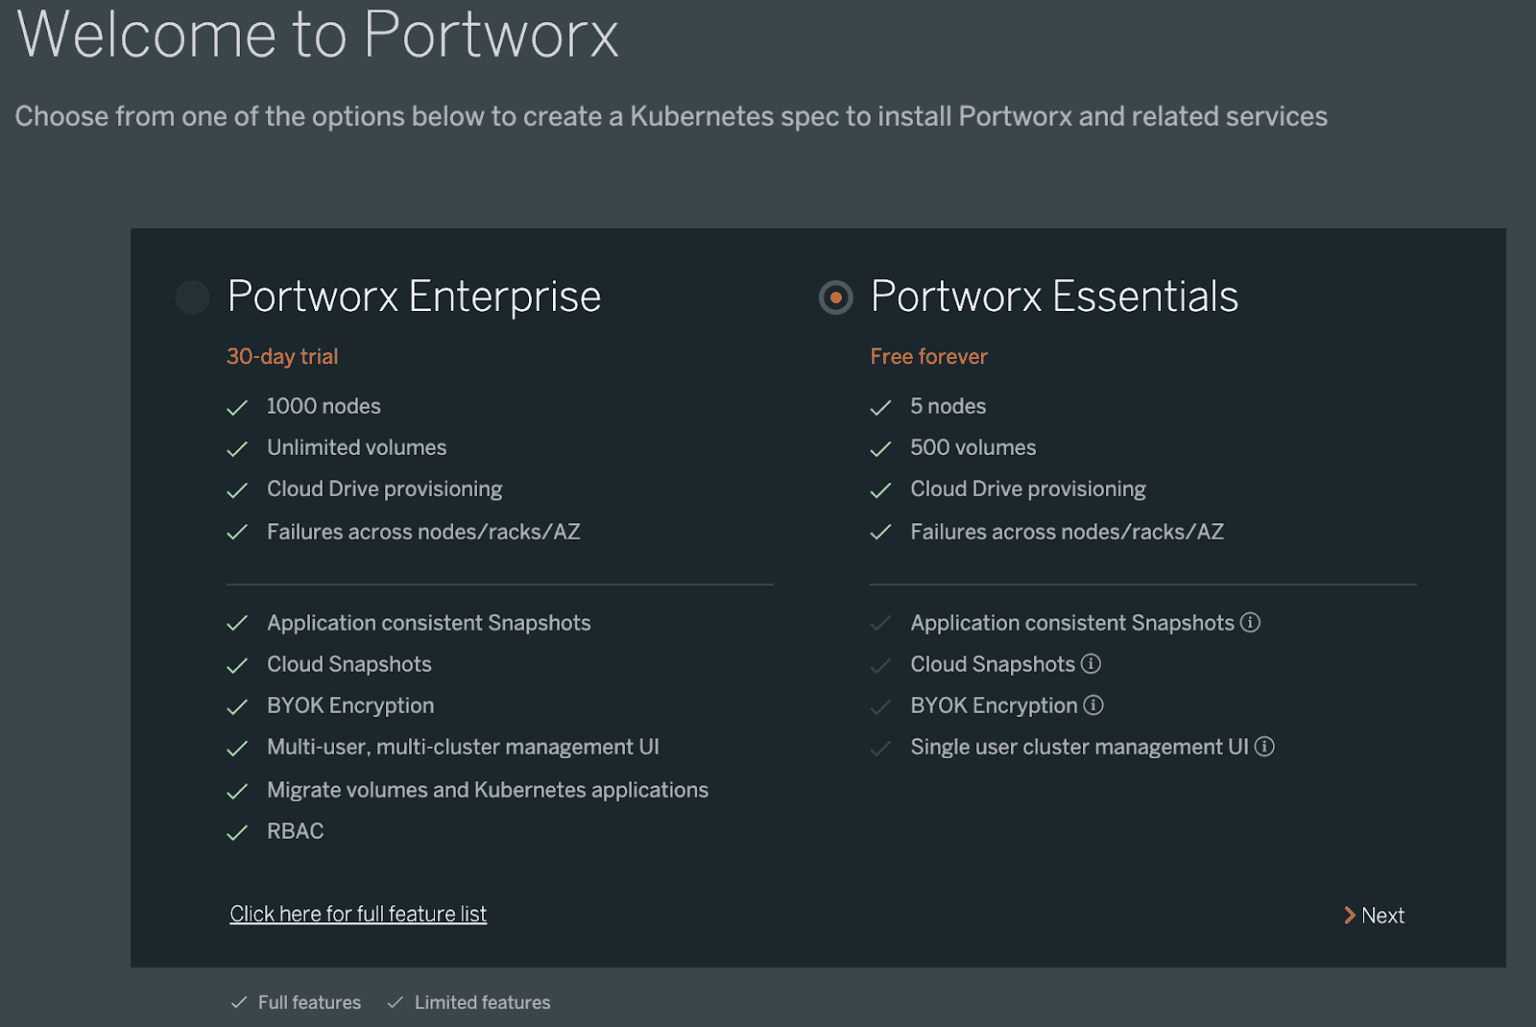 Portworx-Entrprise